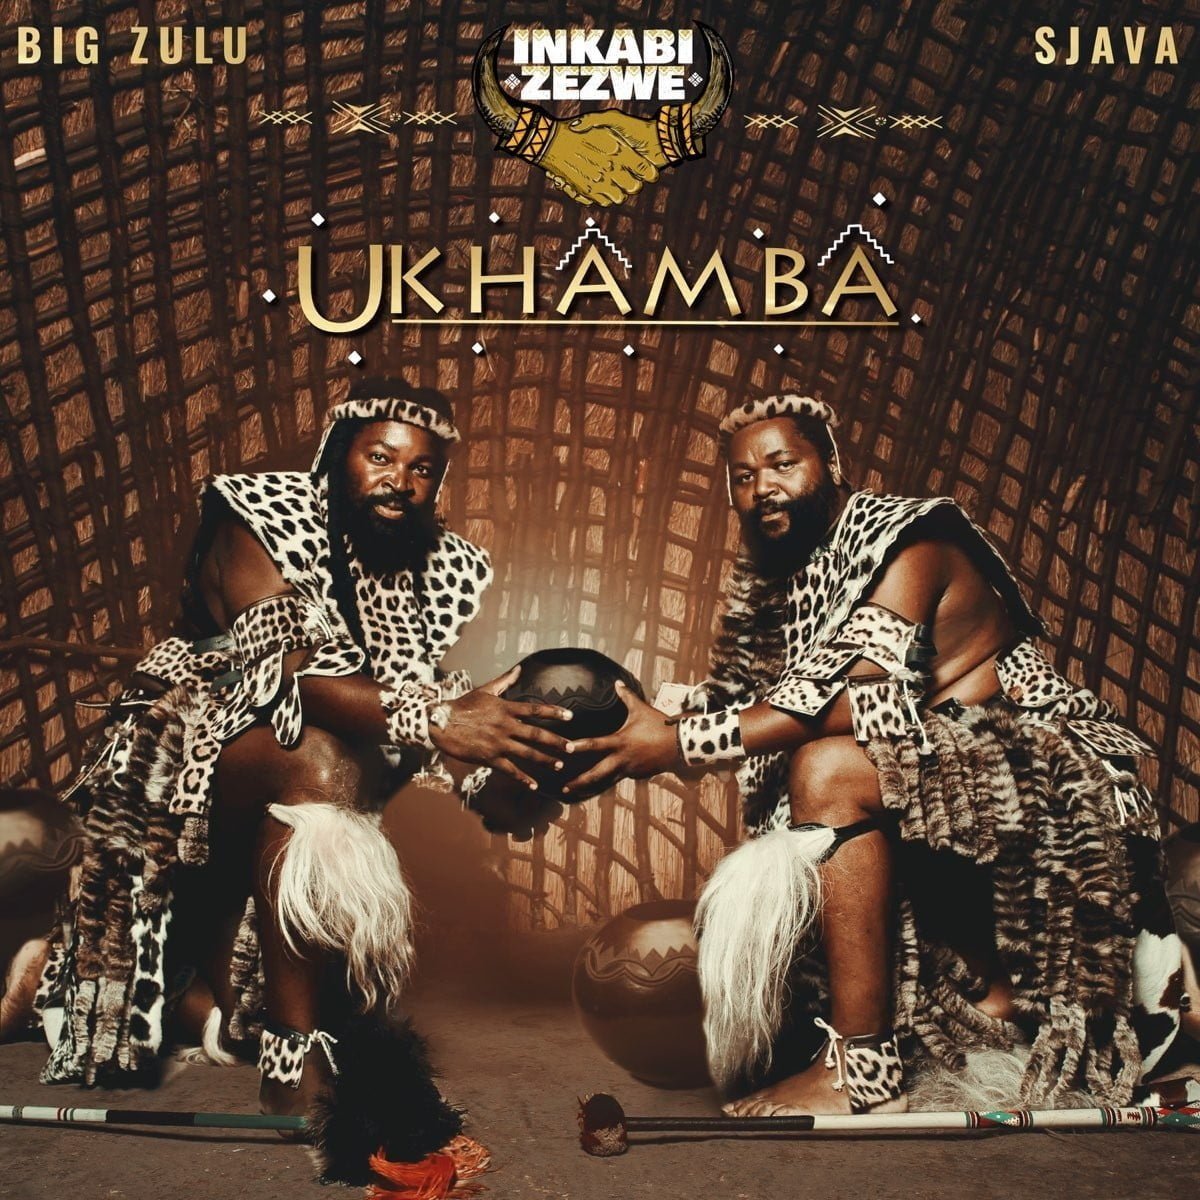 Inkabi Zezwe, Sjava & Big Zulu - Ilanga mp3 download free lyrics